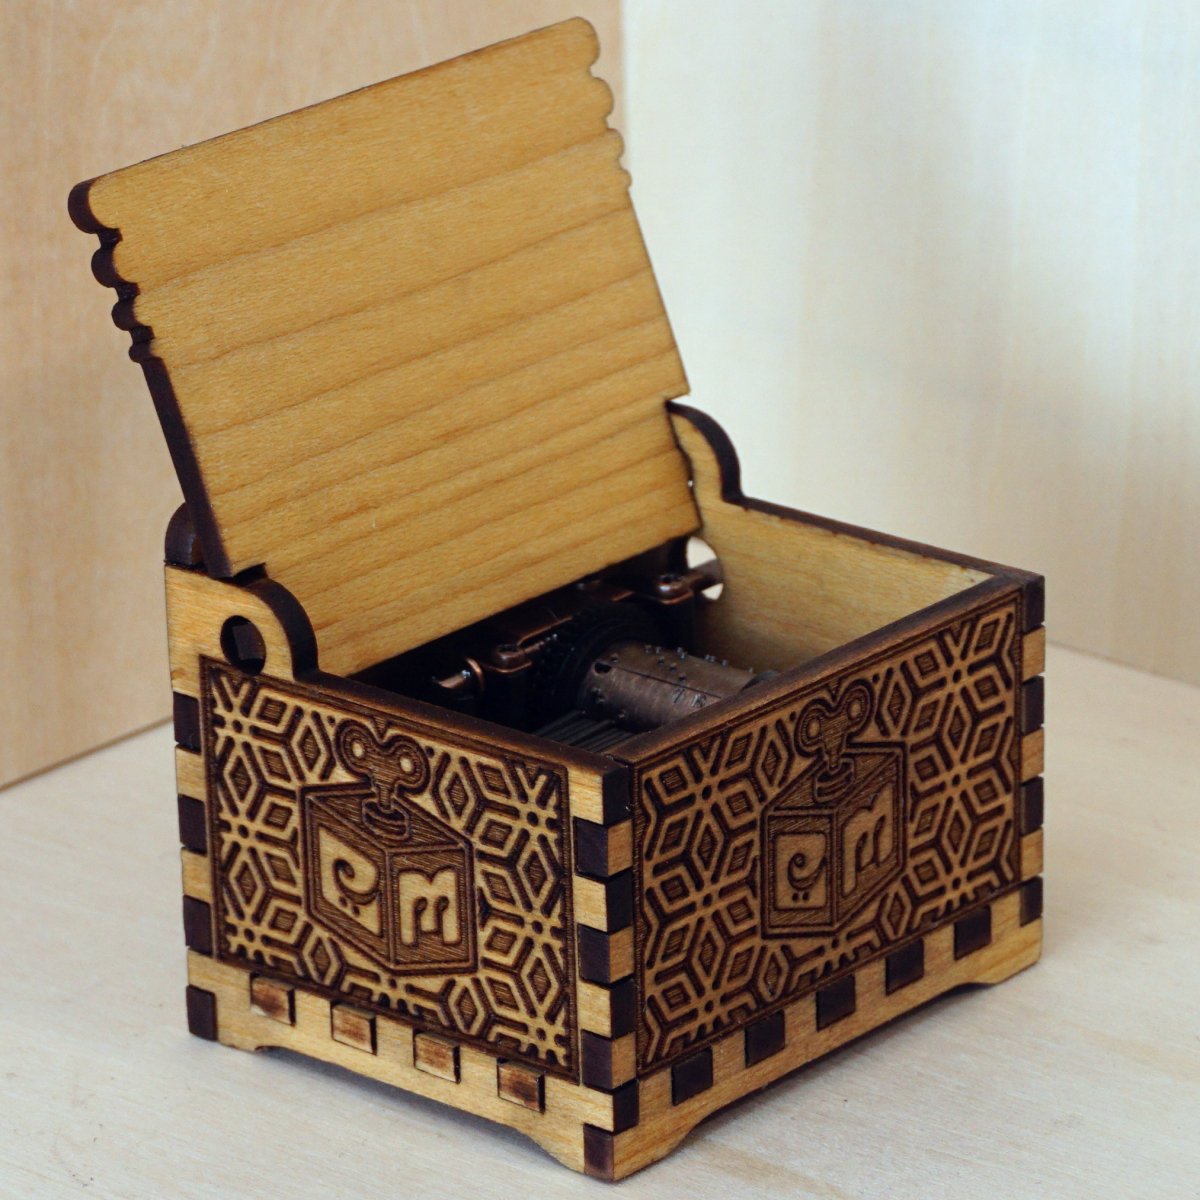 The Legend of Zelda Music Box Hand Crank Music Box Carved Wood